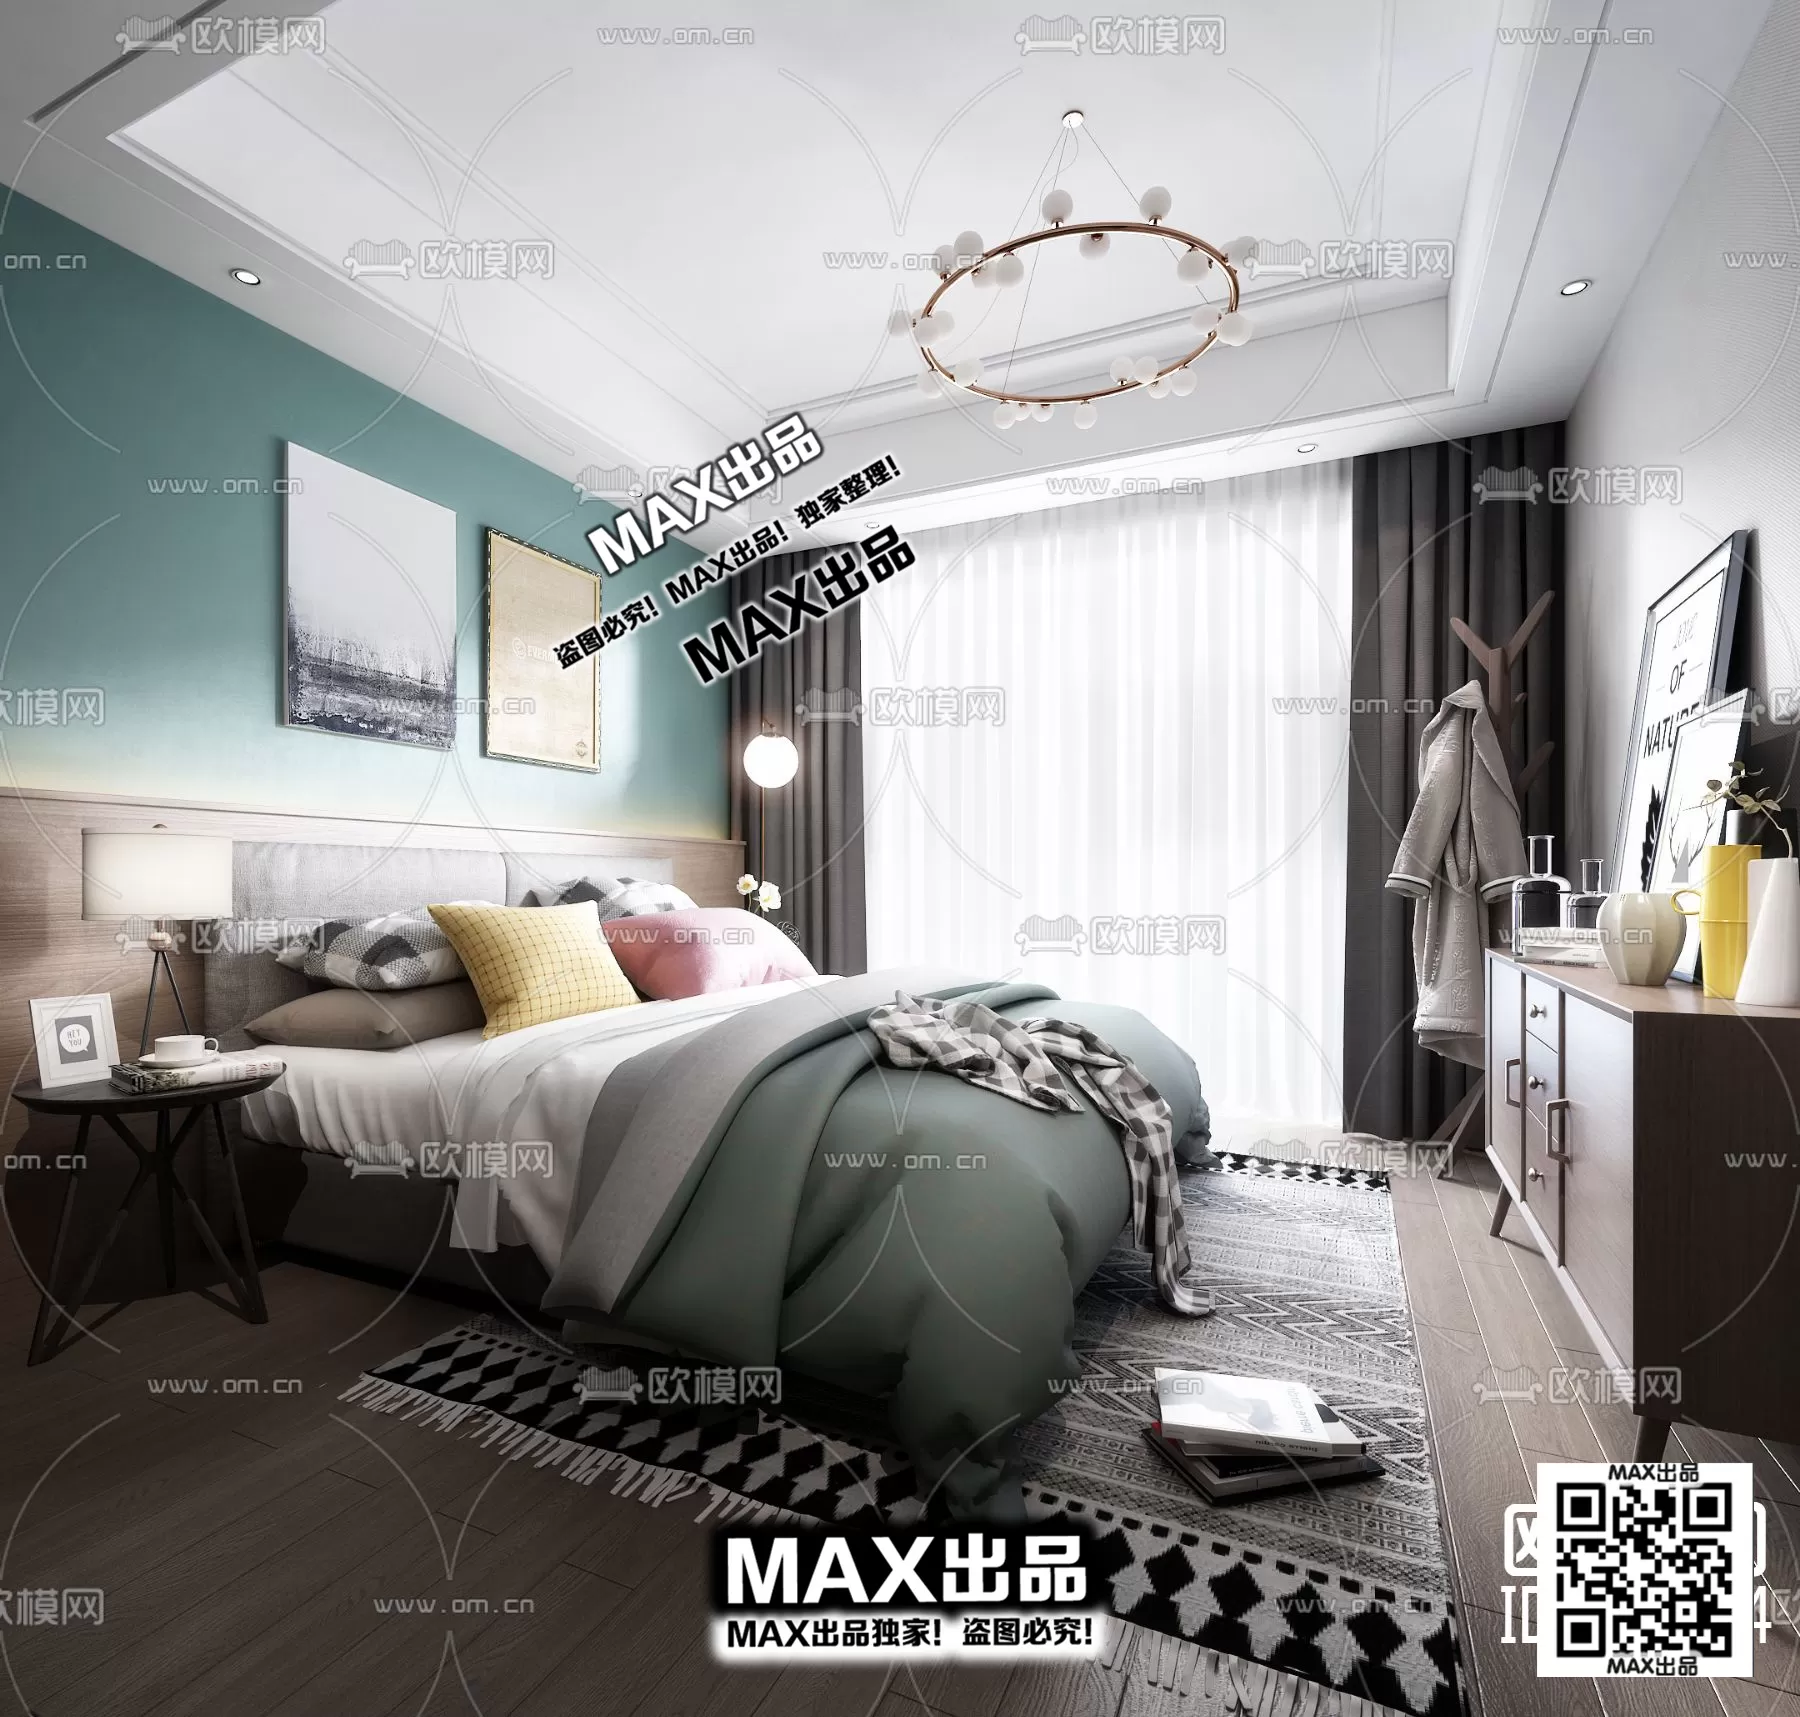 3DS MAX SCENES – LIVING ROOM – 201